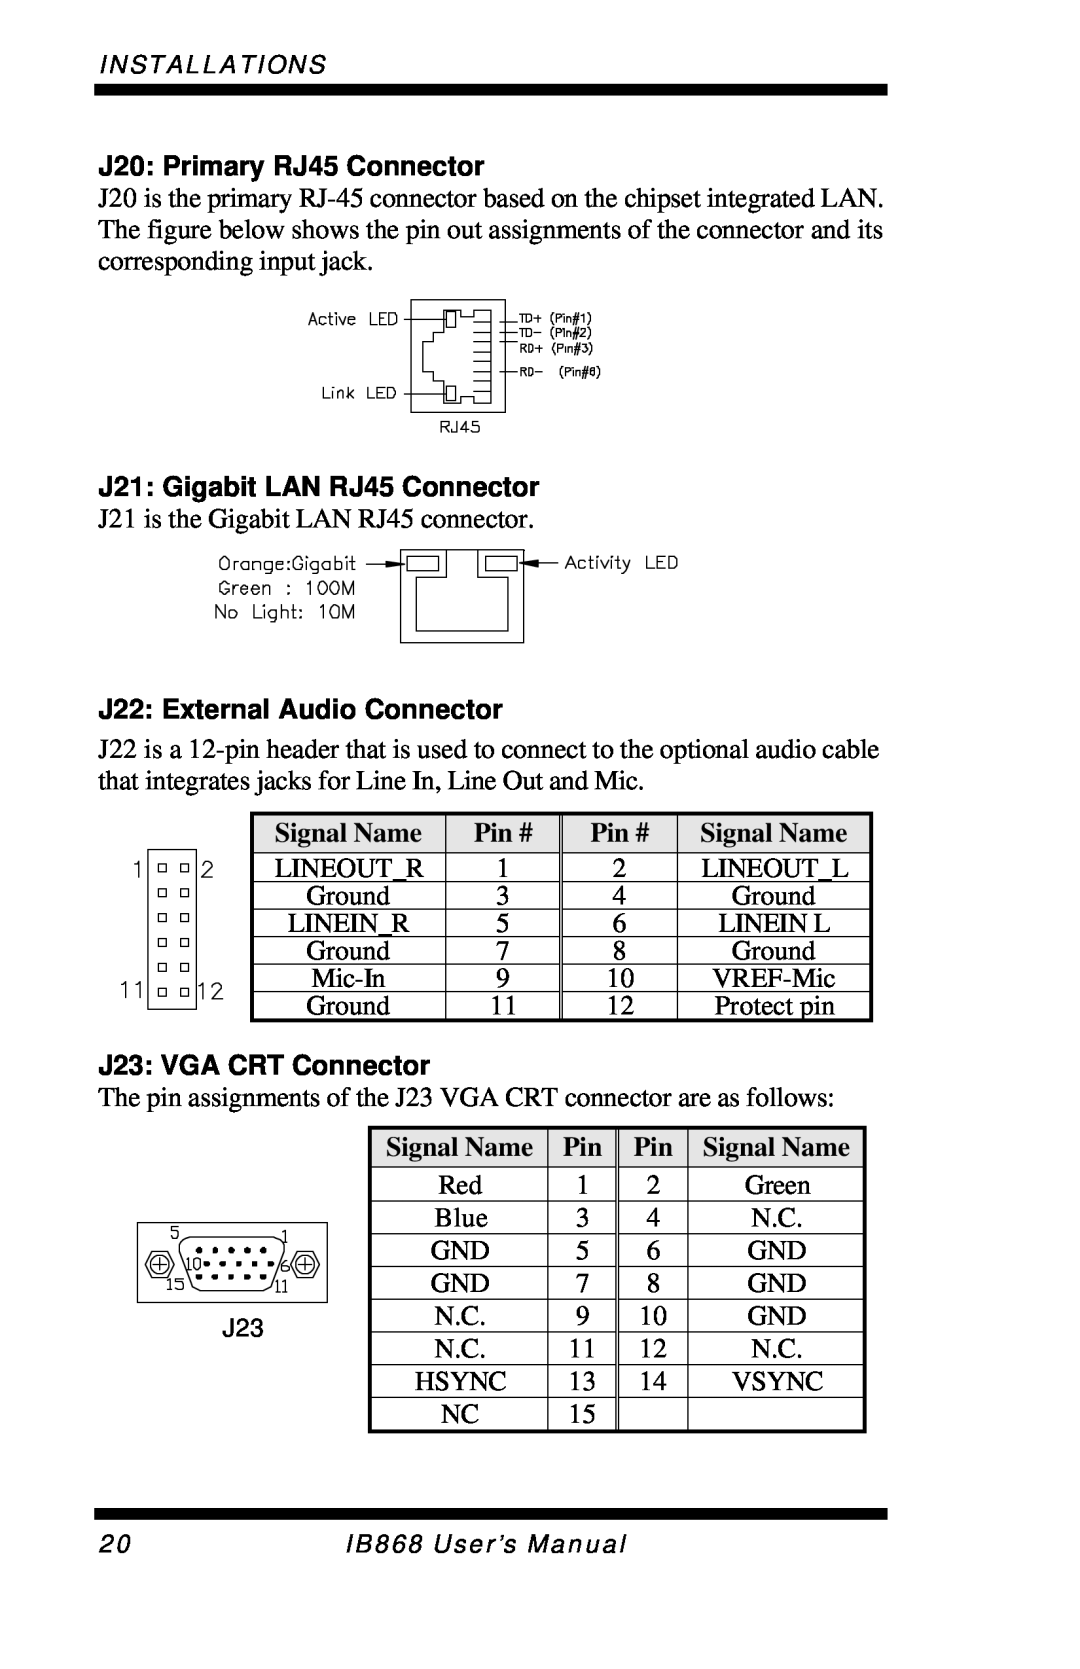 Intel IB868 user manual J20: Primary RJ45 Connector, J21: Gigabit LAN RJ45 Connector, J22: External Audio Connector 